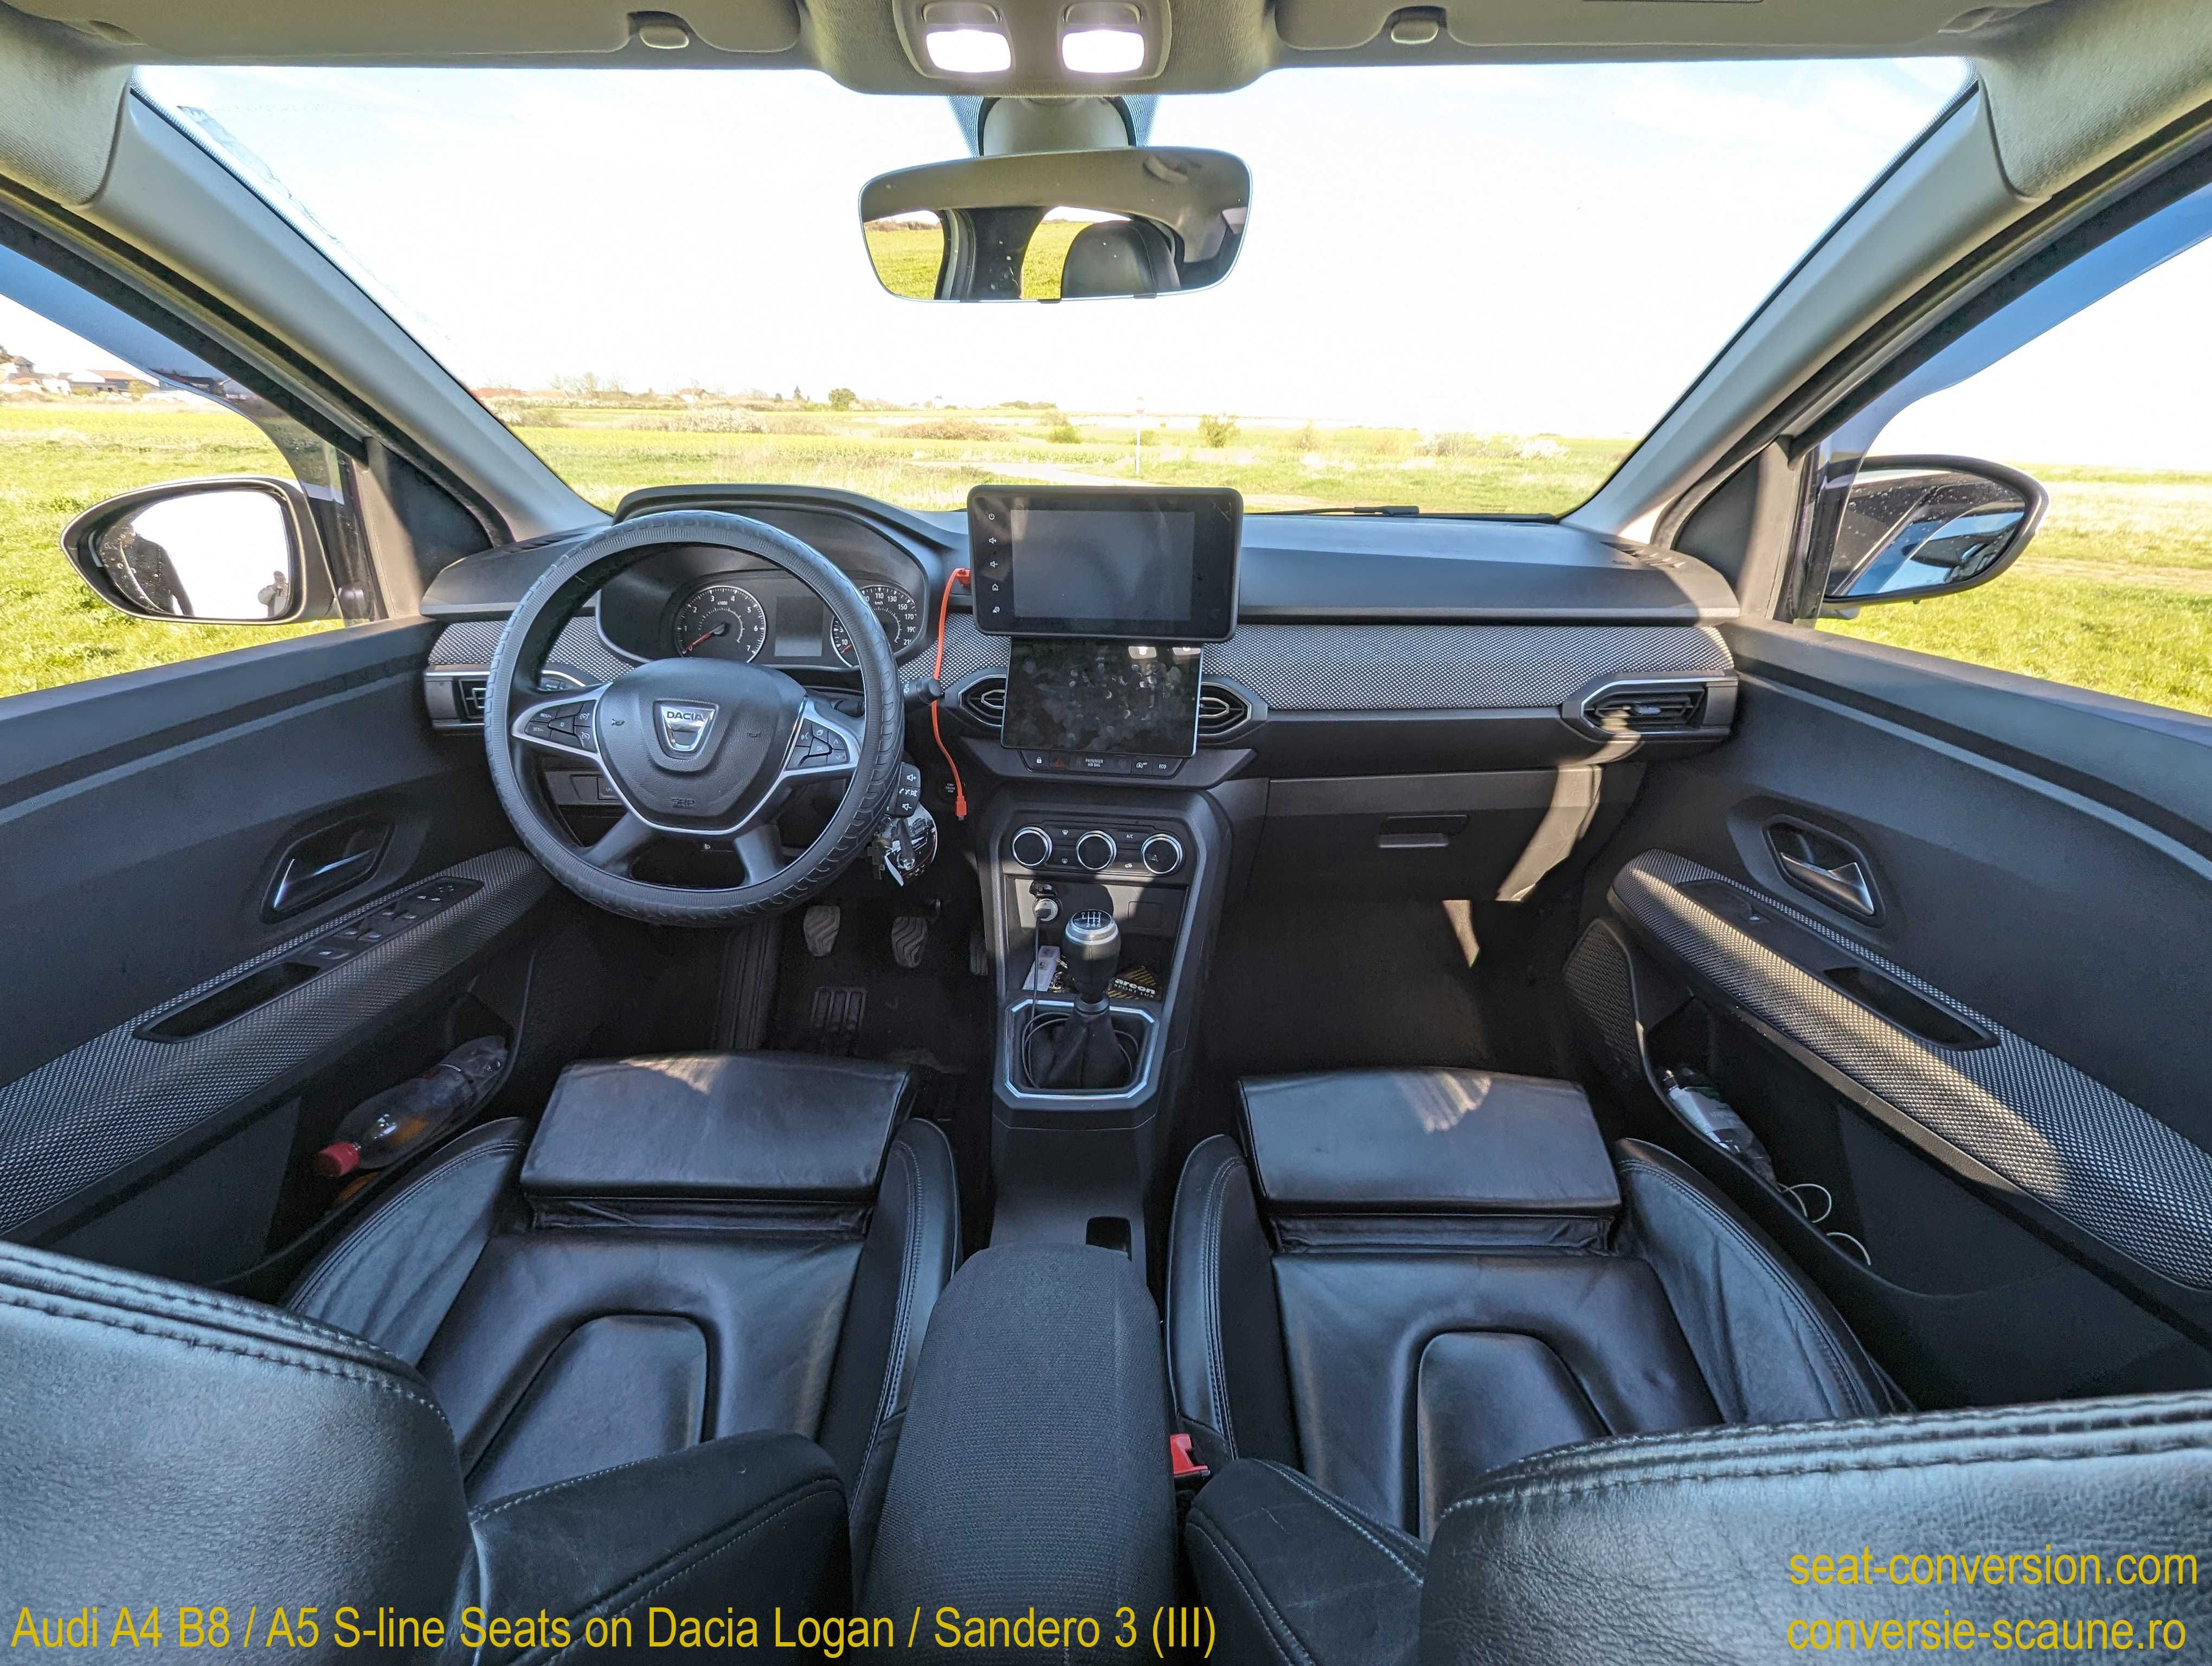 Sistem conversie scaune Audi A5 S-line - Logan Sandero 3 III 2020 +